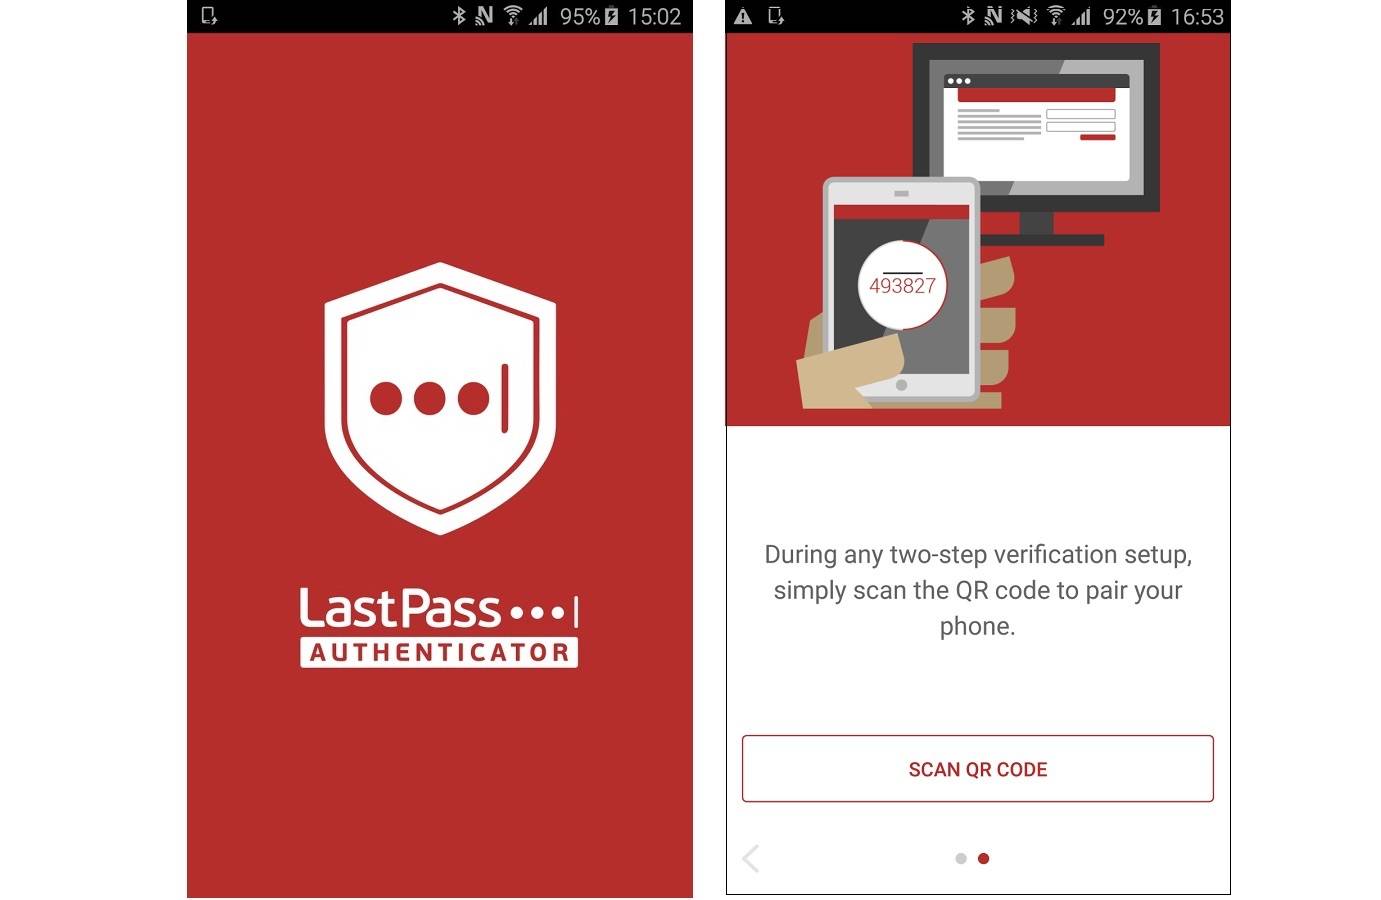 lastpass authenticator app